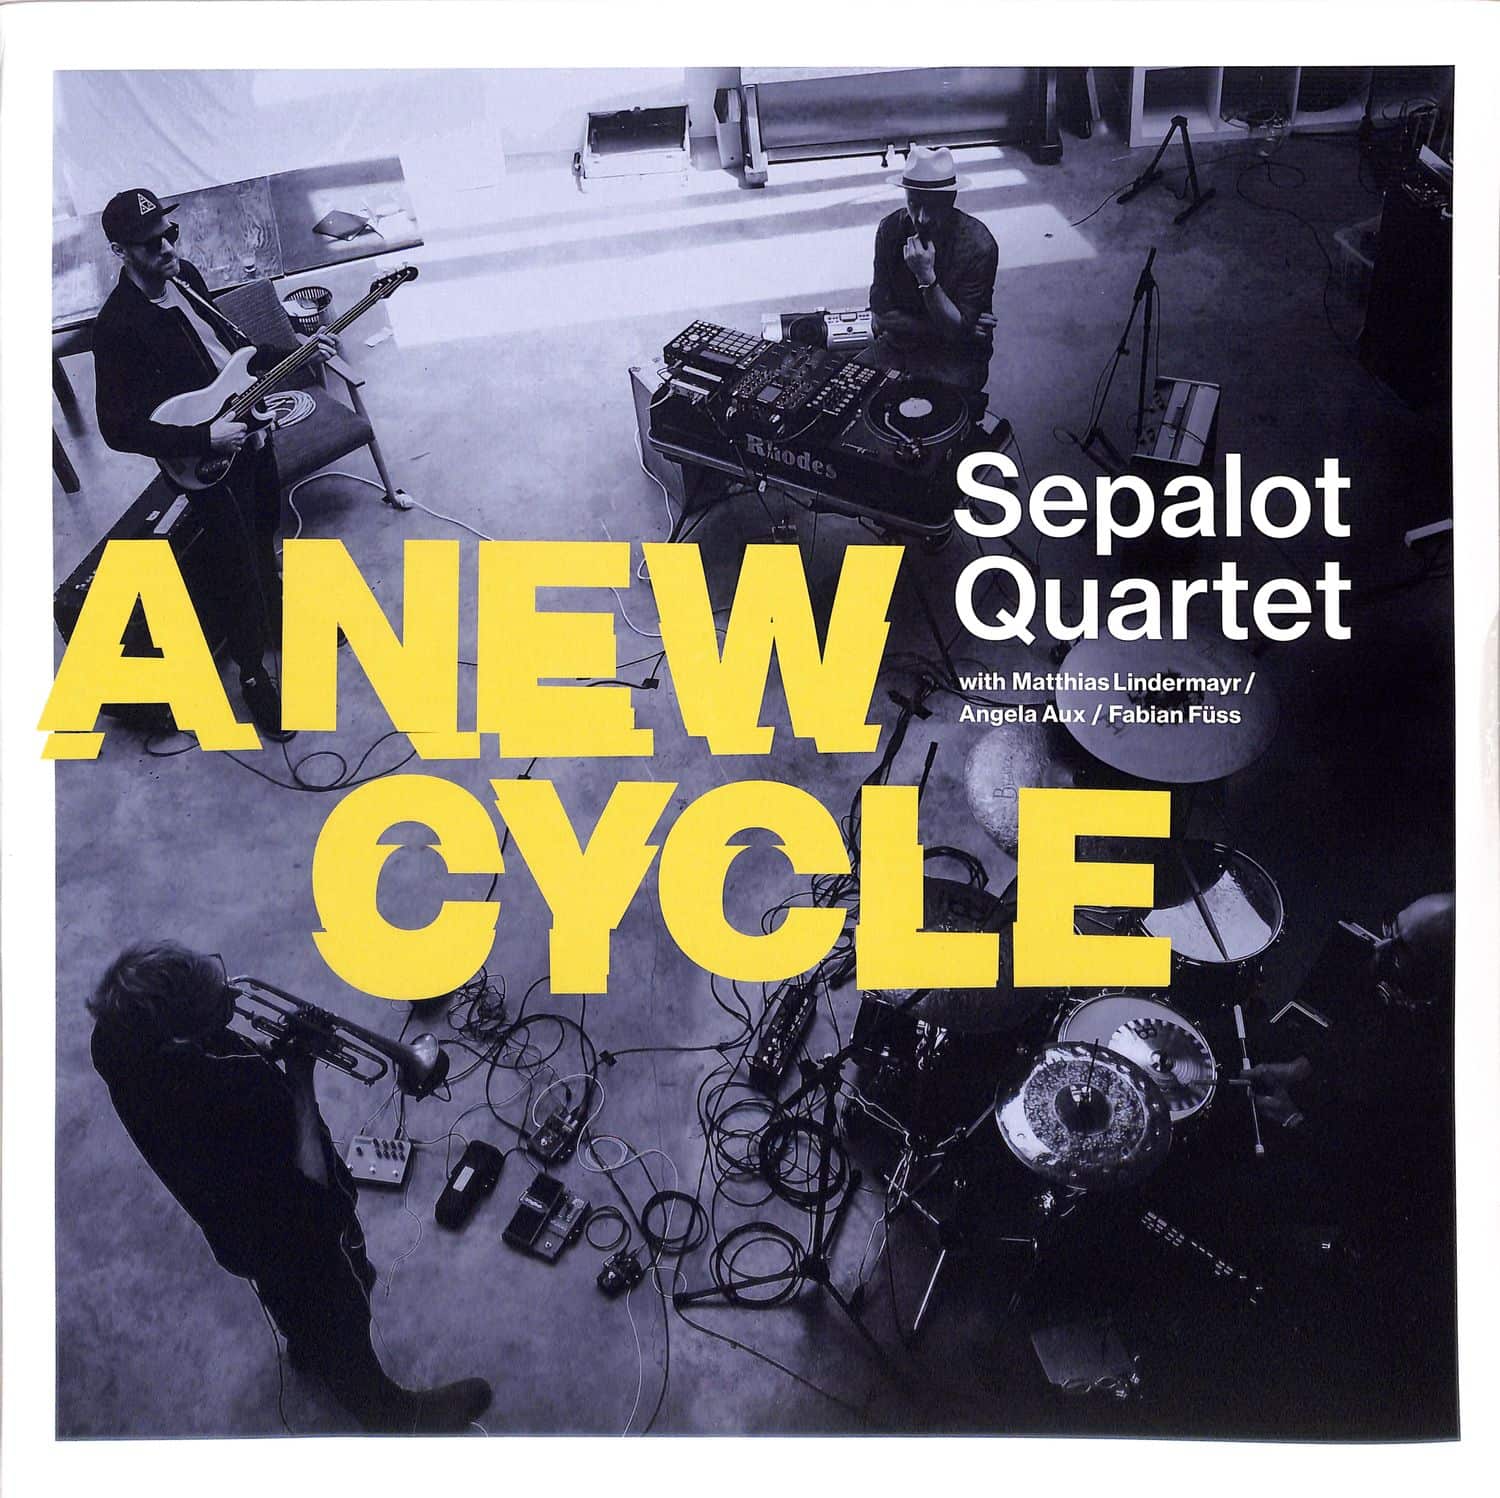 Sepalot Quartet - A NEW CYCLE 